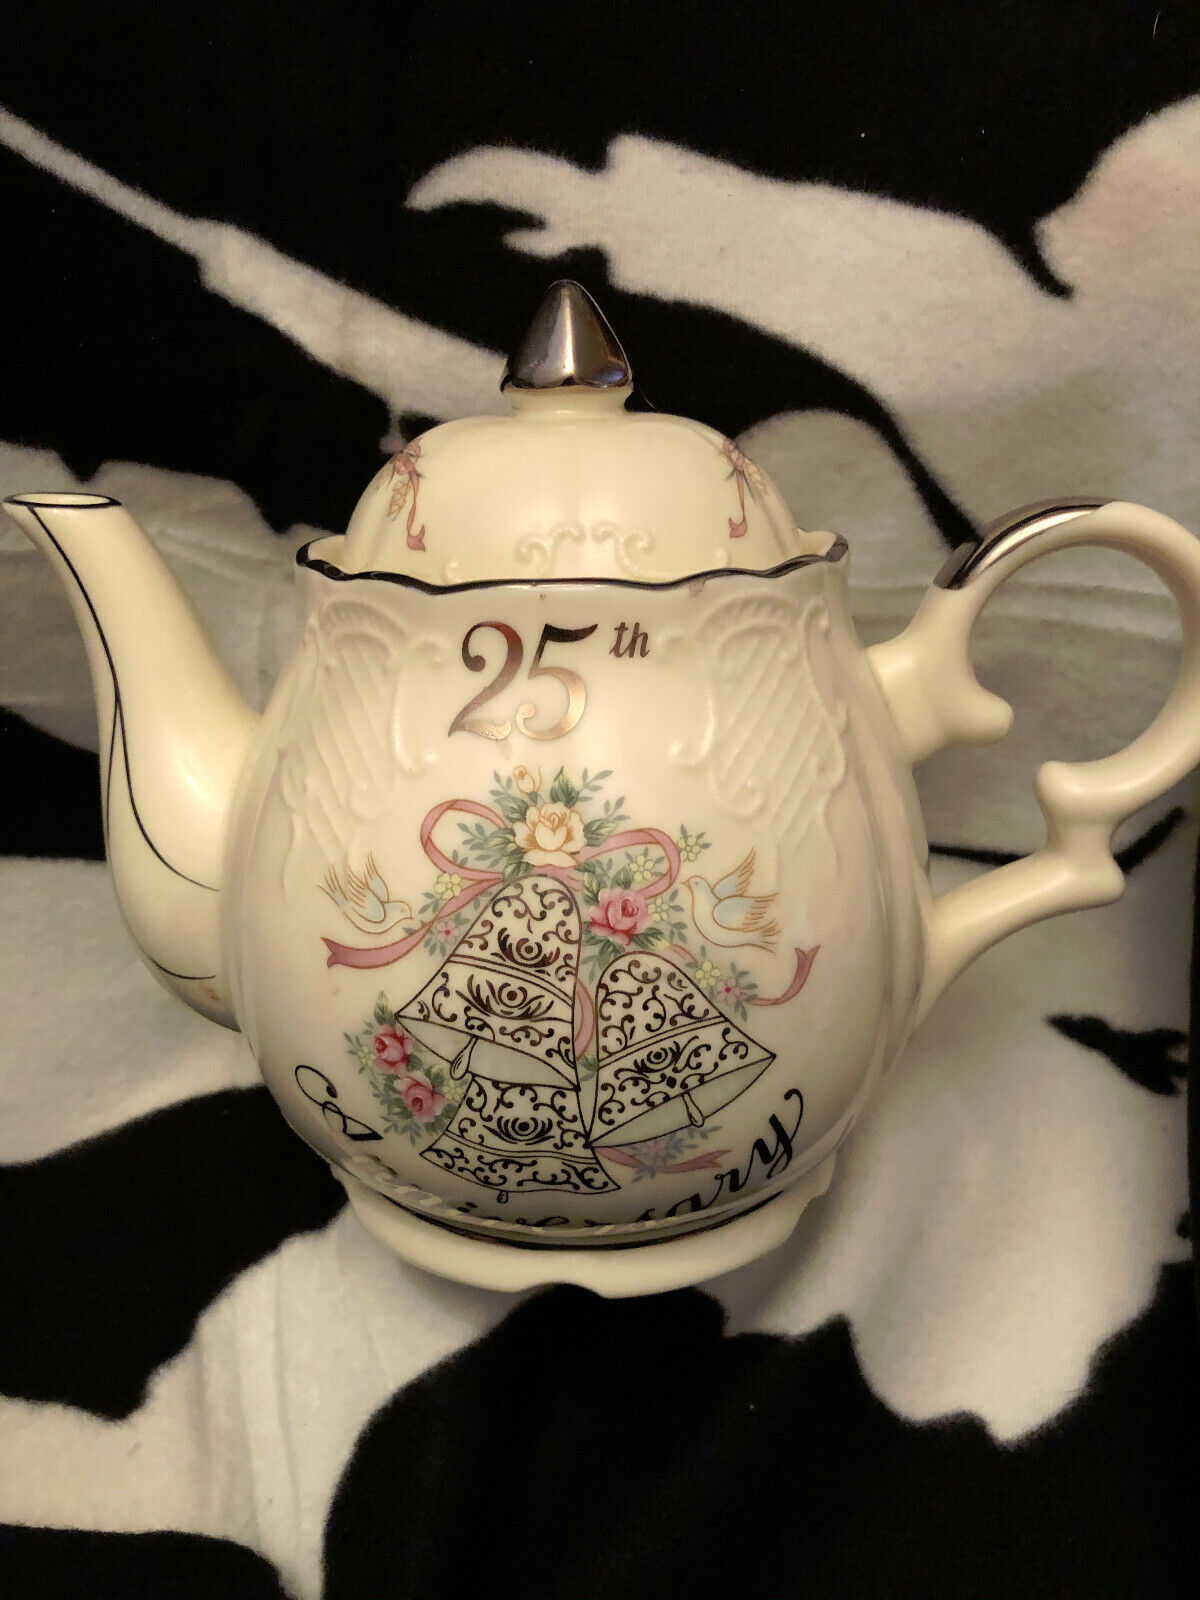 Lefton 25th Anniversary Teapot Bells Ribbons Flowers Embossed Patten Never Used